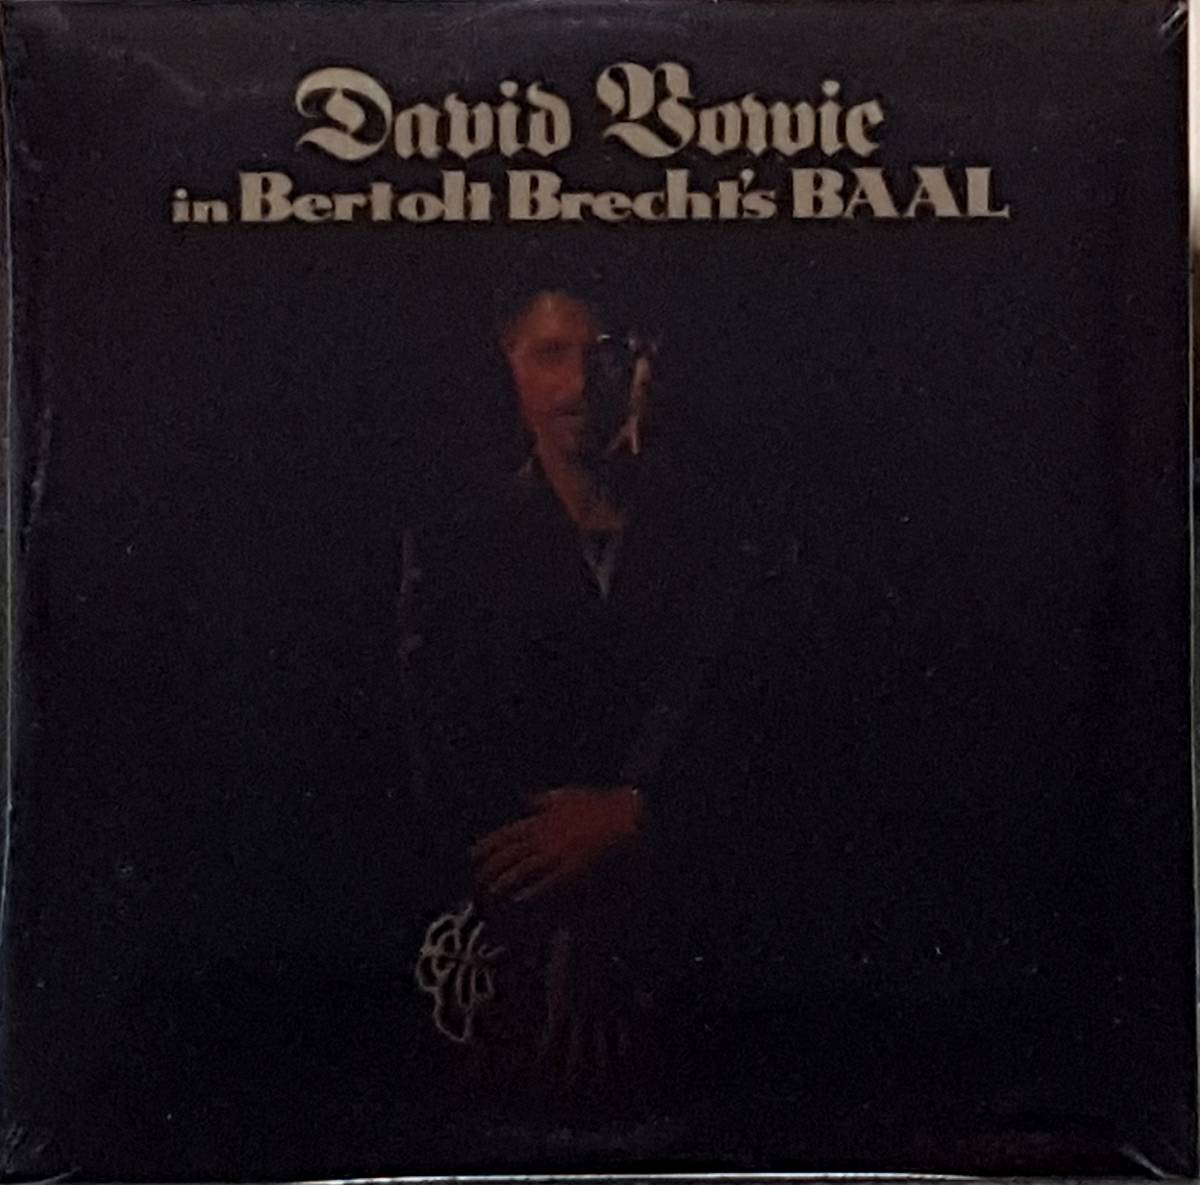 David Bowie デヴィッド ボウイ - In Bertolt Brecht's Baal ベルトルト ブレヒト  限定10インチ45回転EPアナログ レコード(David Bowie)｜売買されたオークション情報、yahooの商品情報をアーカイブ公開 -  オークファン（aucfan.com）